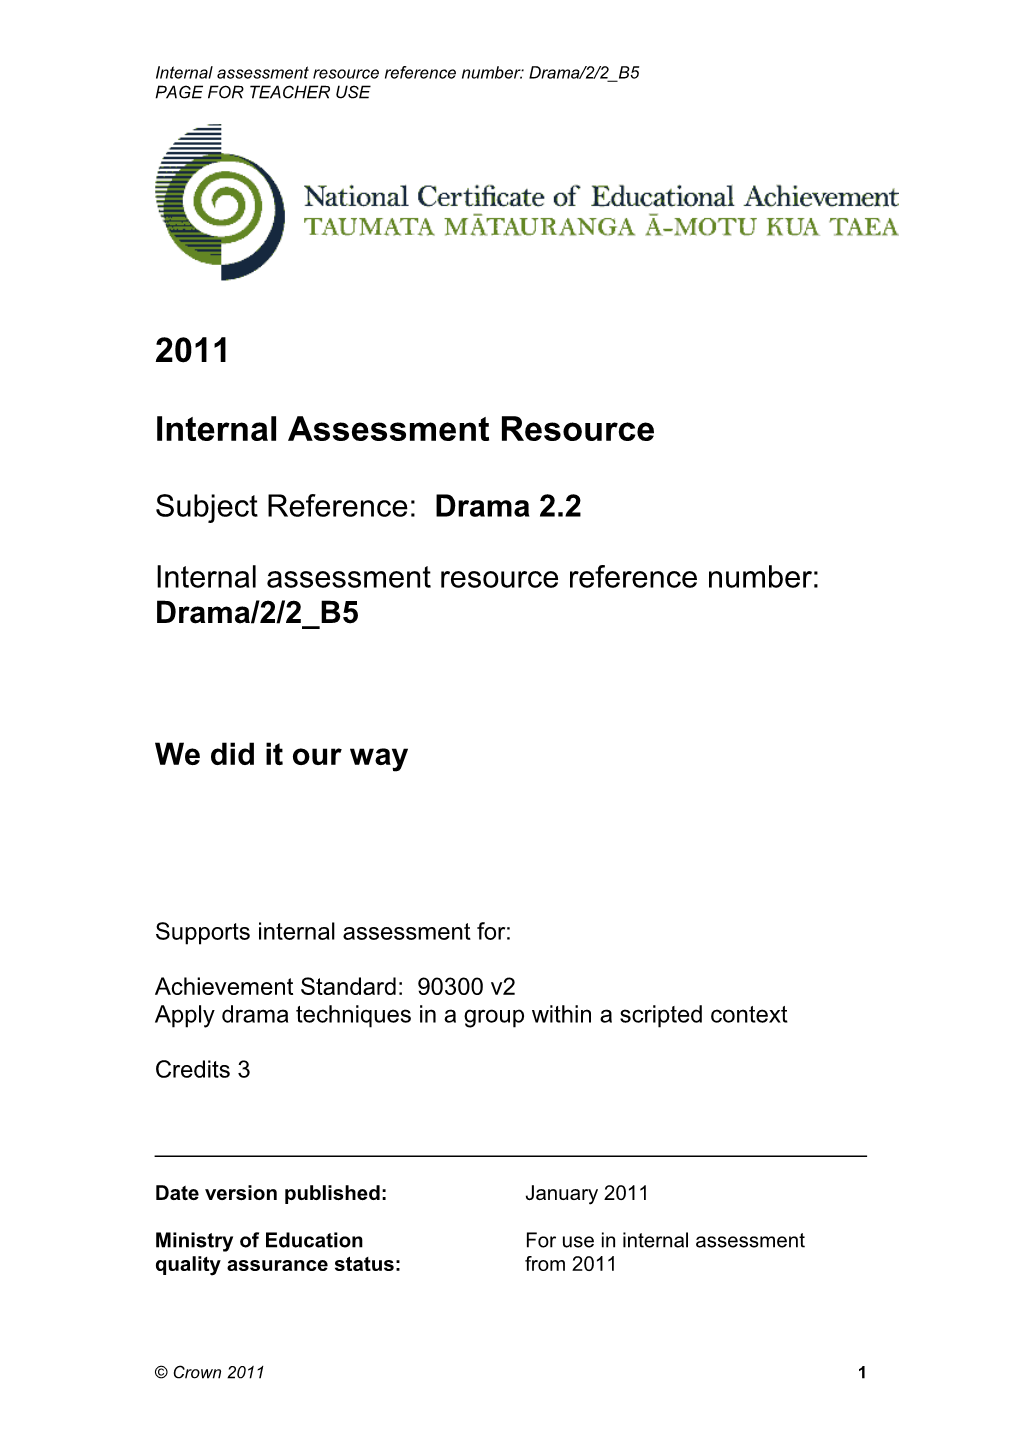 Drama L2 Internal Assessment Resource